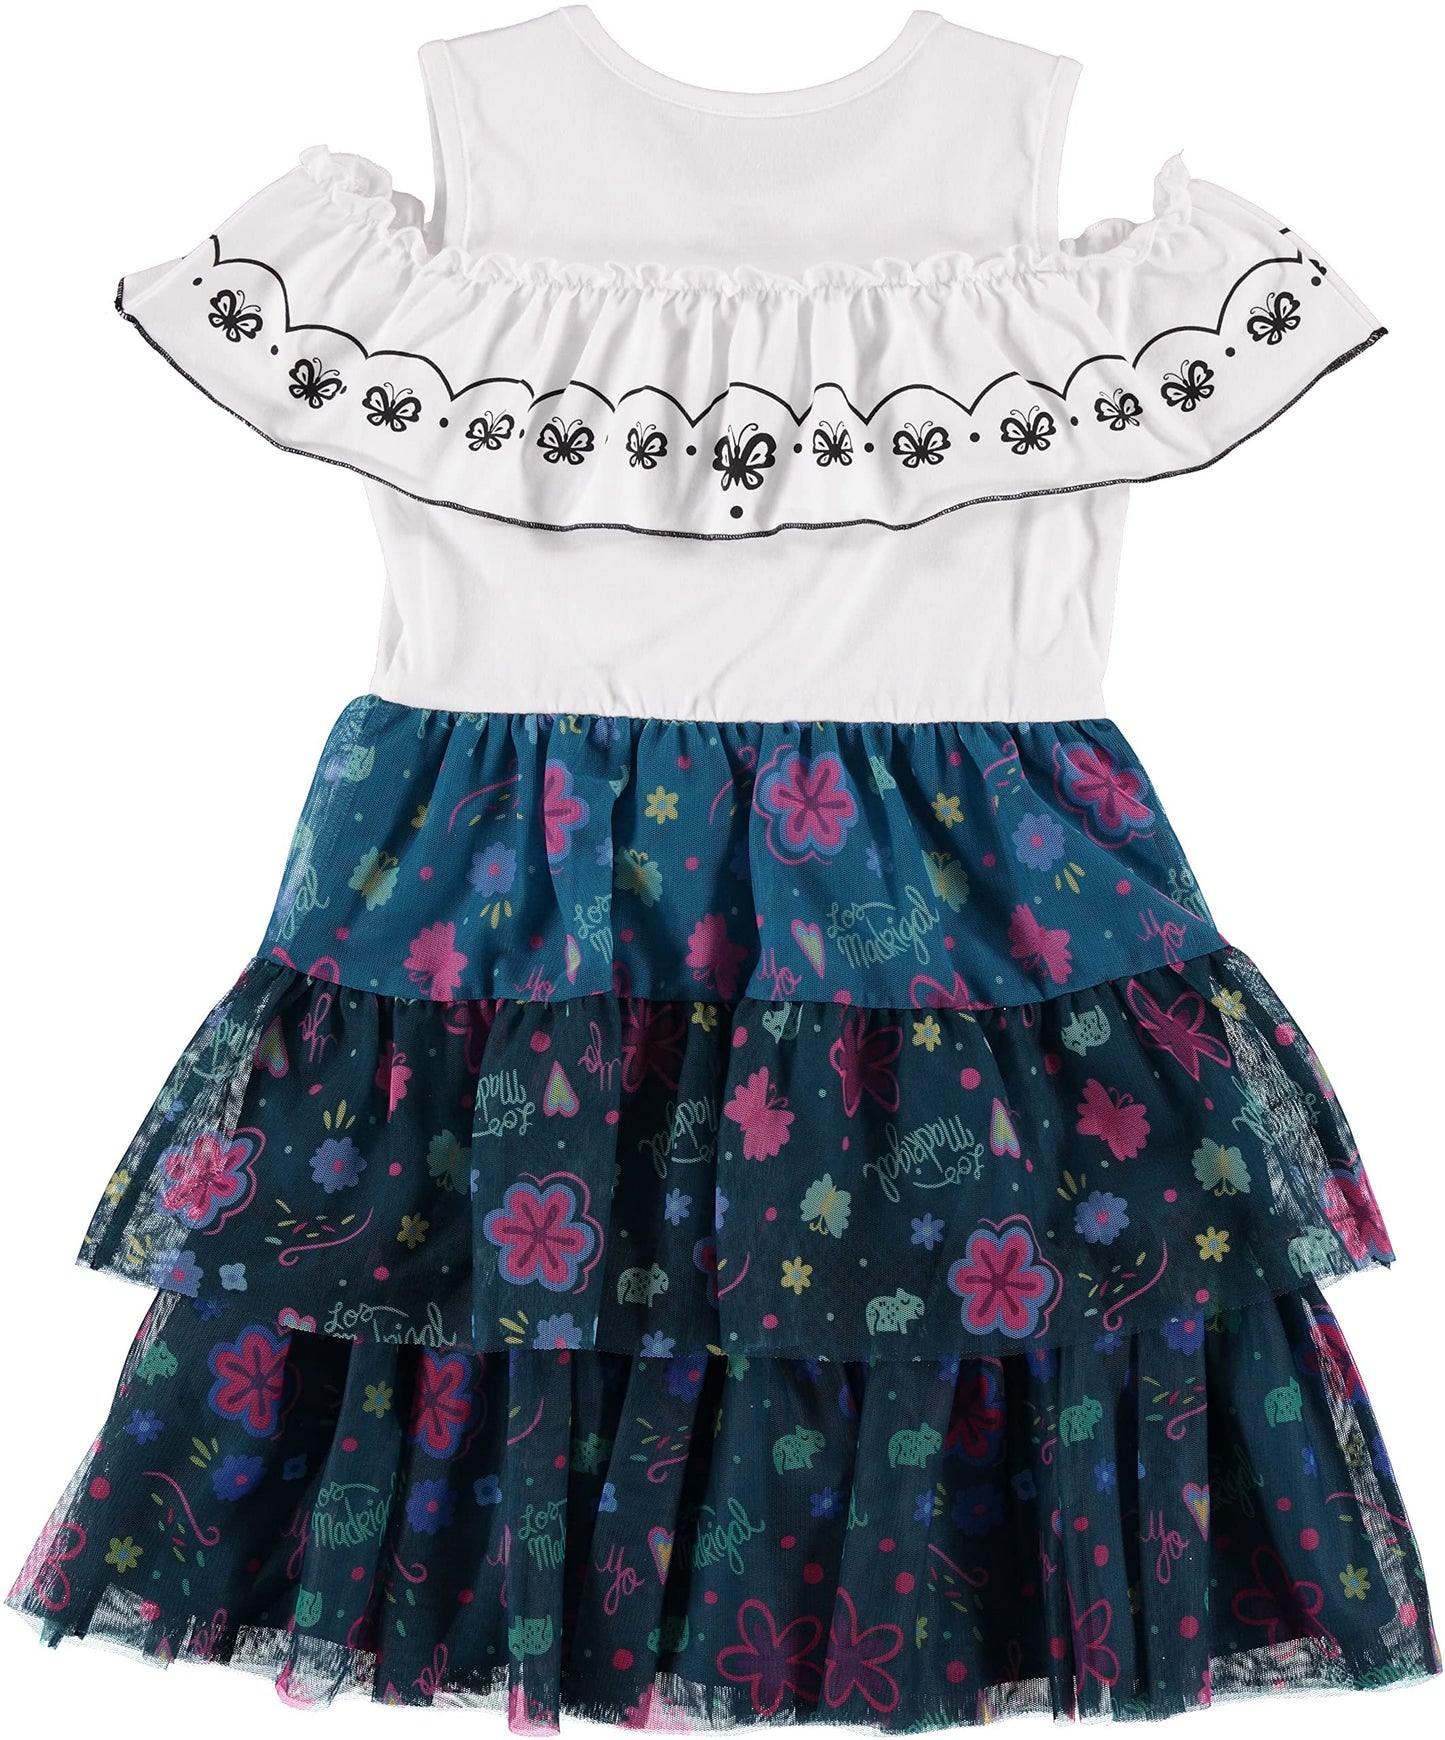 DISNEY Girls Lavender Tutu Flower Dress - Encanto Inspired Isabela Costume Dress Lilac- Sizes XS-XL